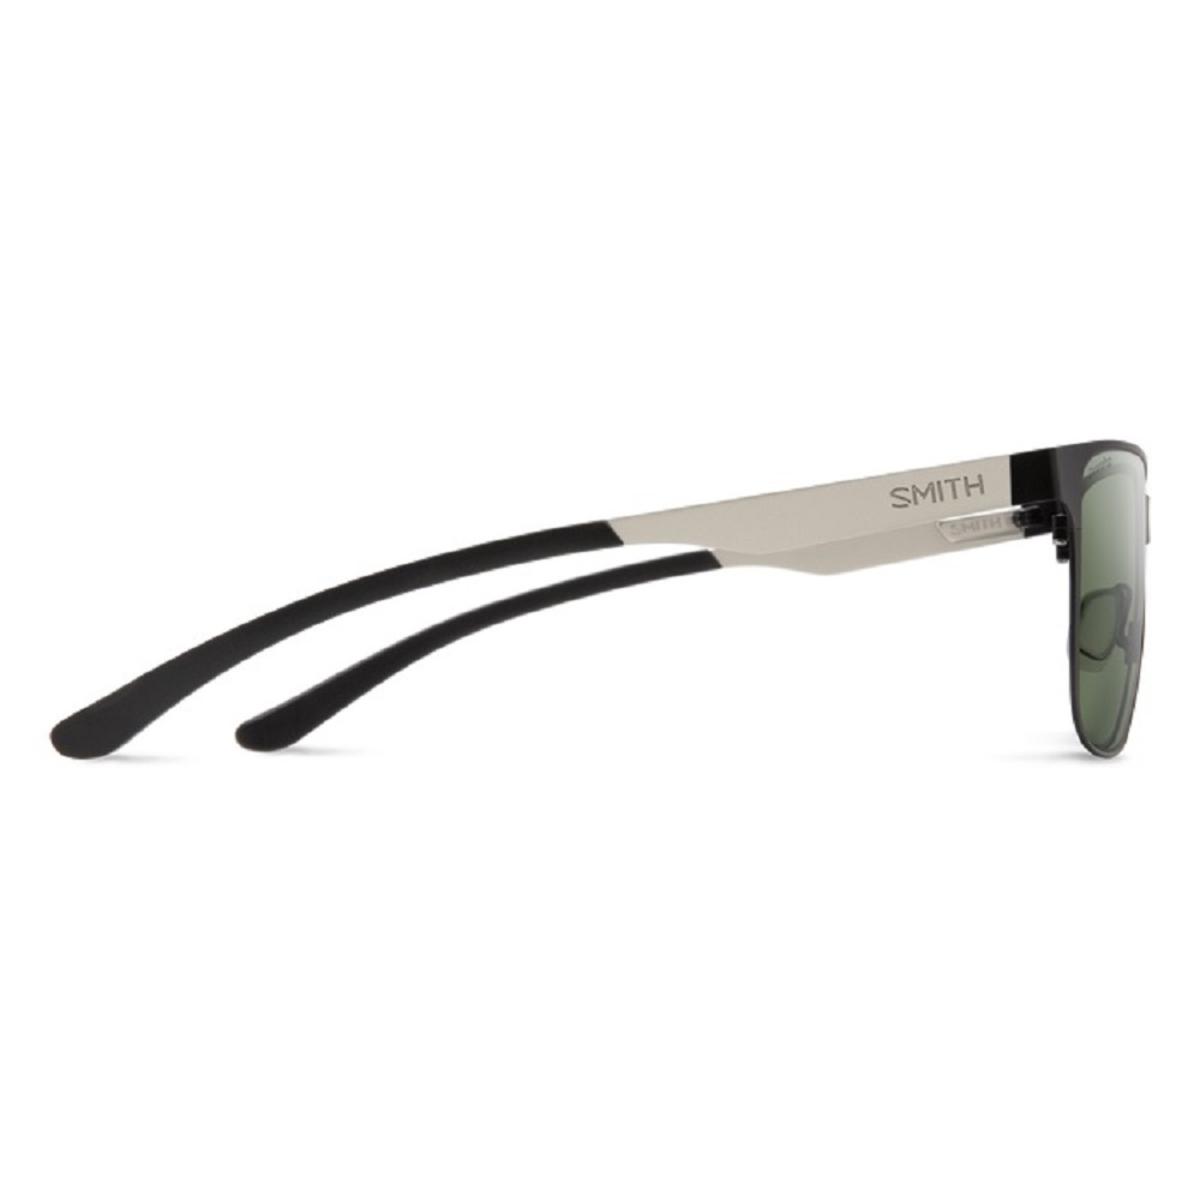 Smith Optics Lowdown Metal Sunglasses ChromaPop Polarized Gray Green - Matte Black/Silver Frame